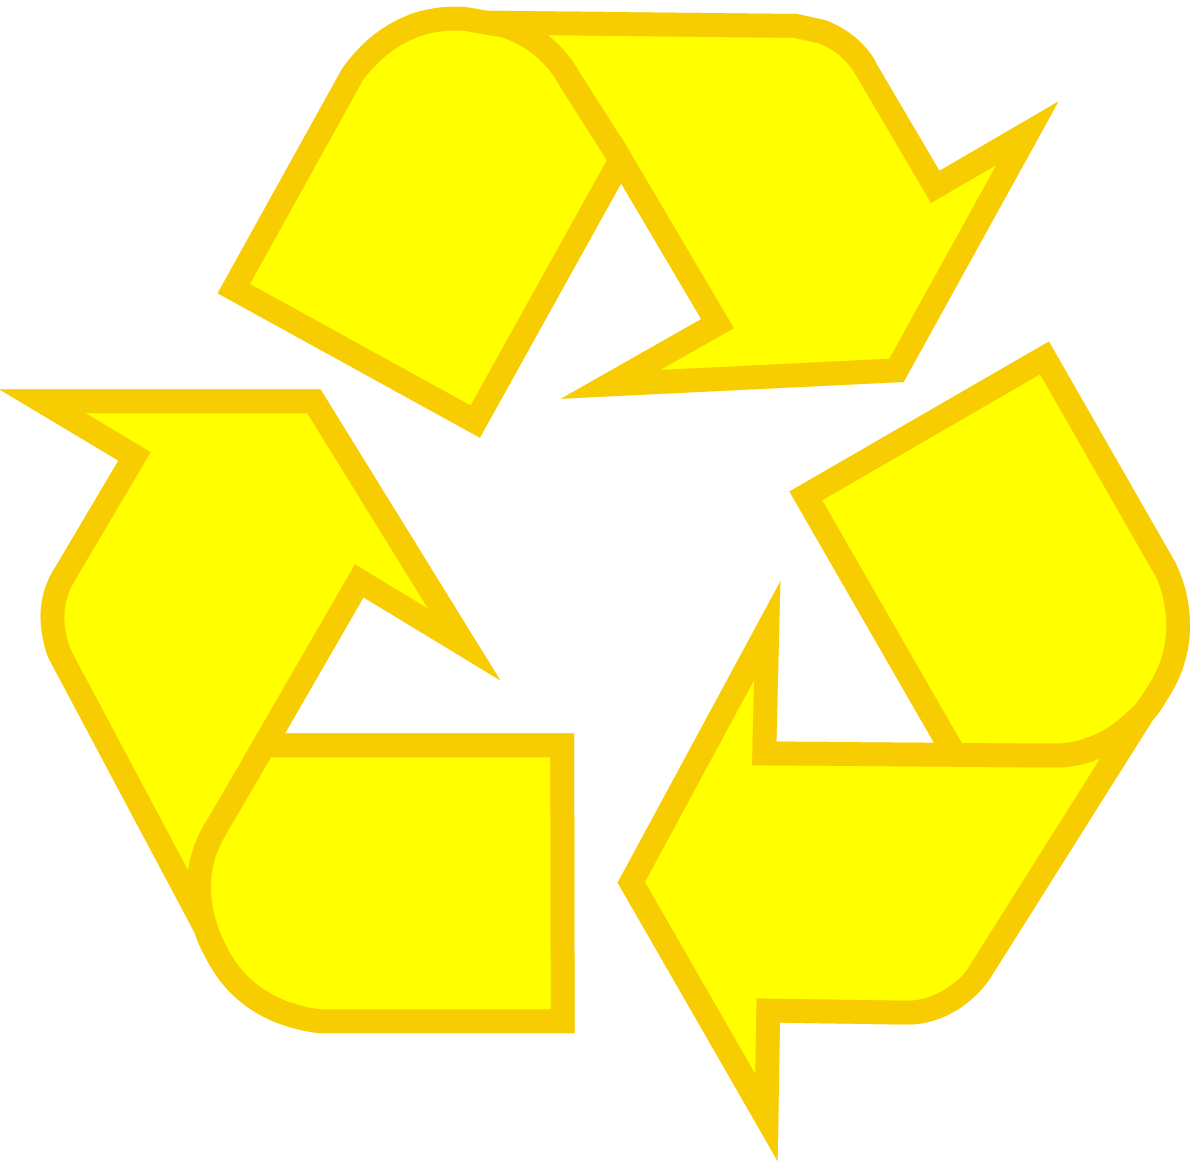 Orange and Yellow Logo - Recycling Symbol the Original Recycle Logo